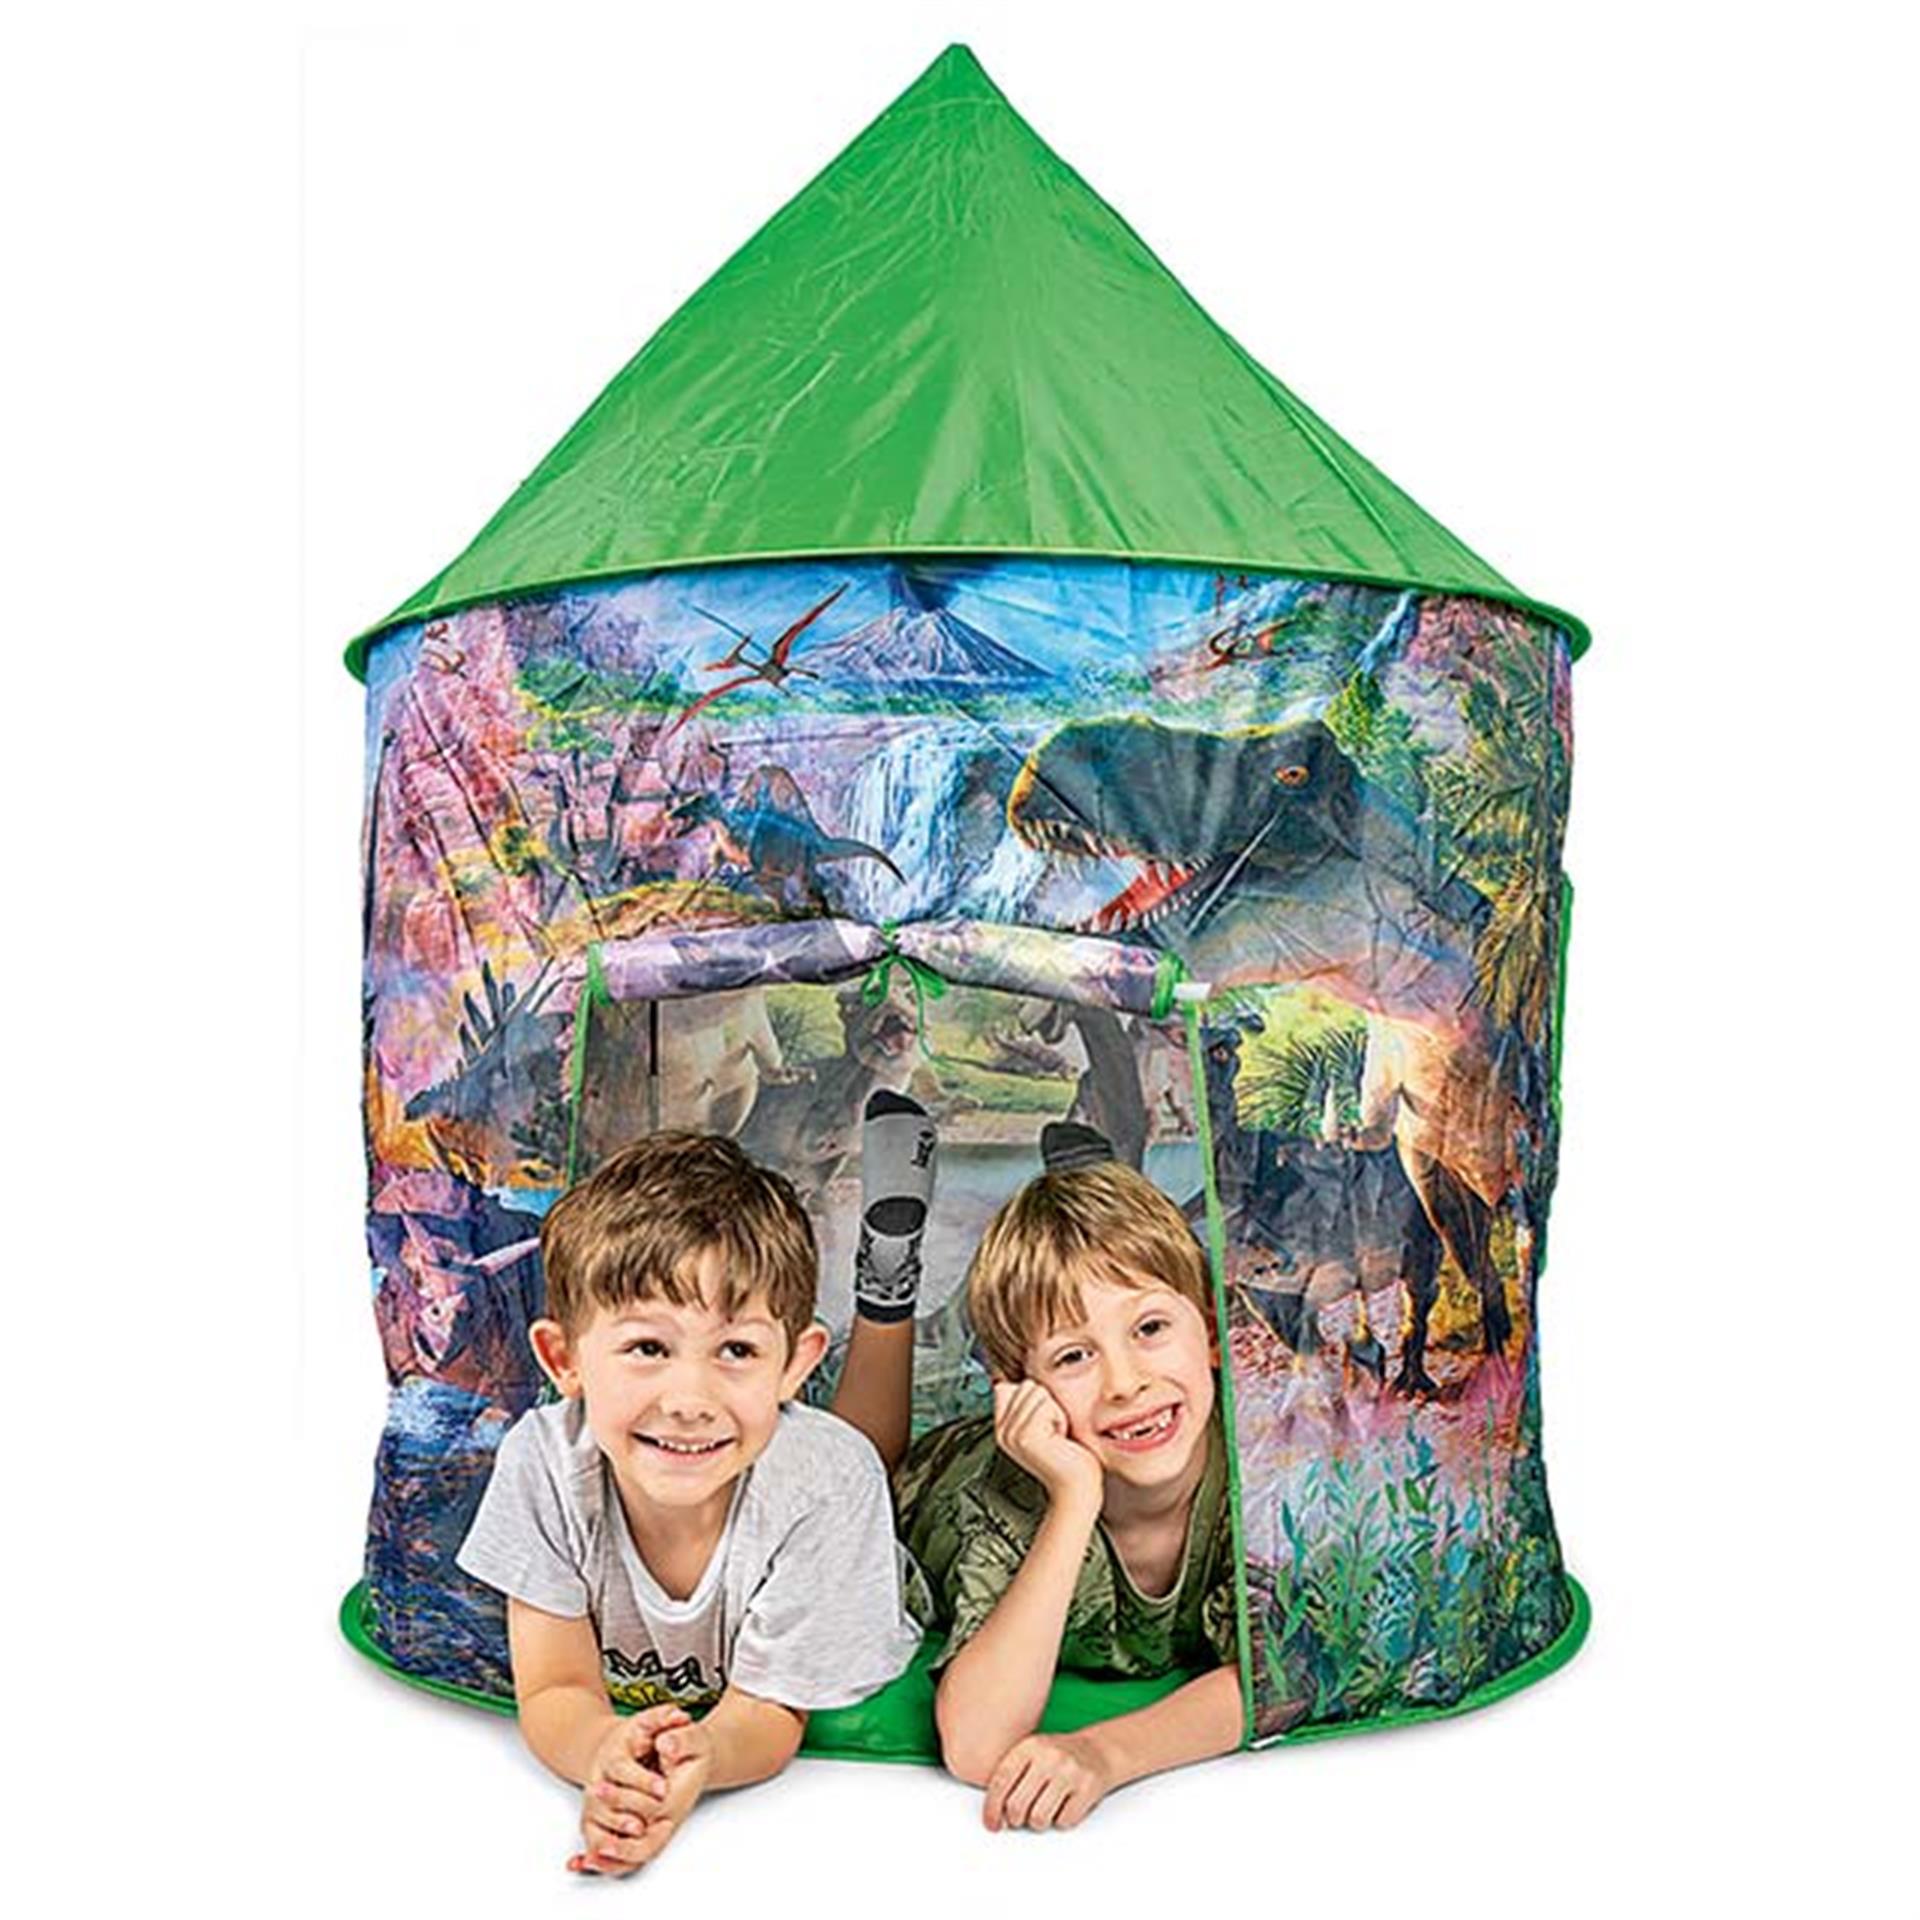 Tende per bambini: offerte e prezzi per tende per cameretta